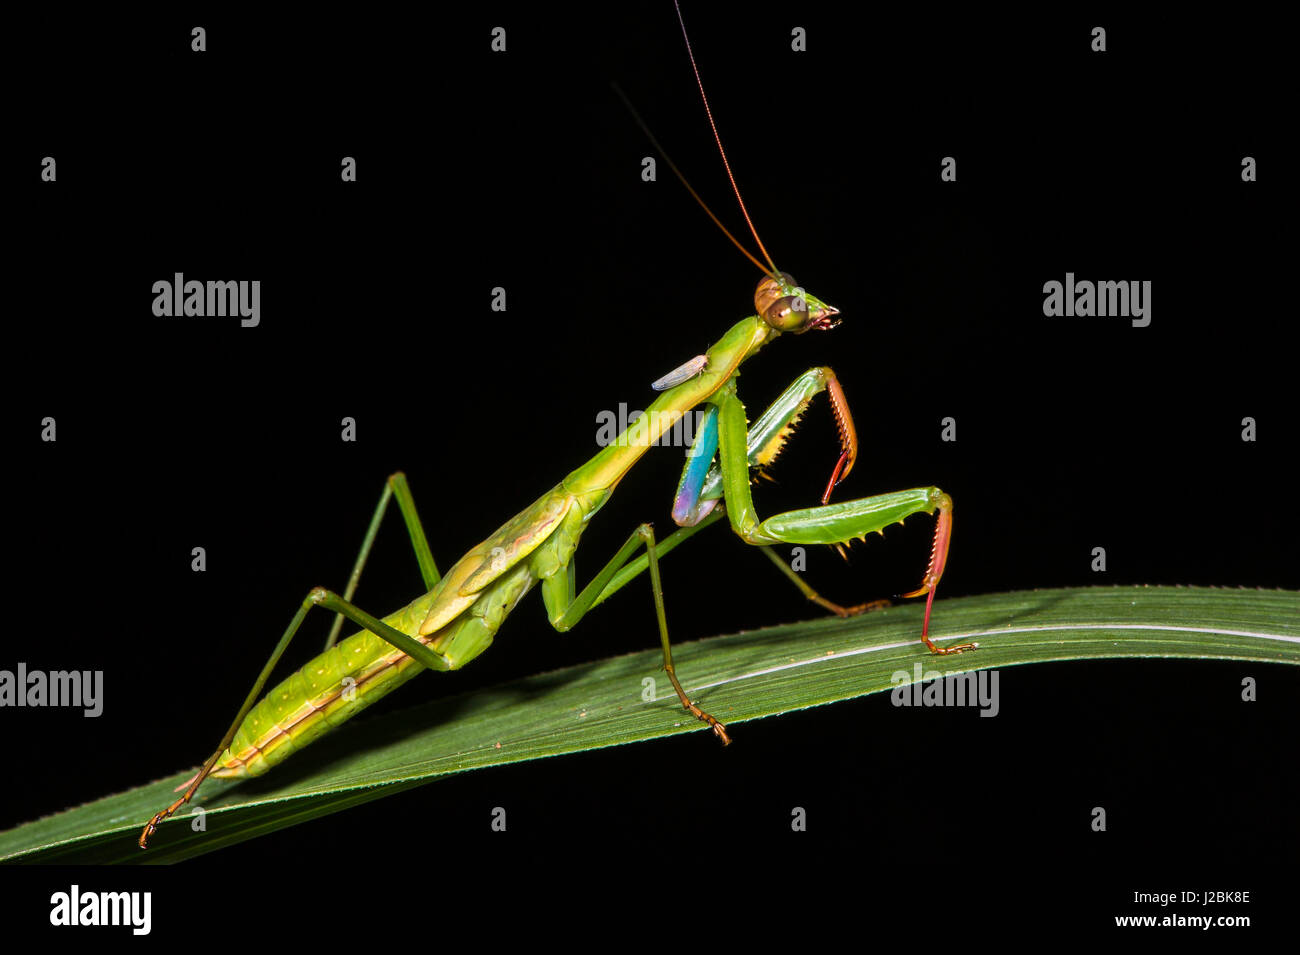 Preying mantis, Odzala, Kokoua National Park, Congo Stock Photo